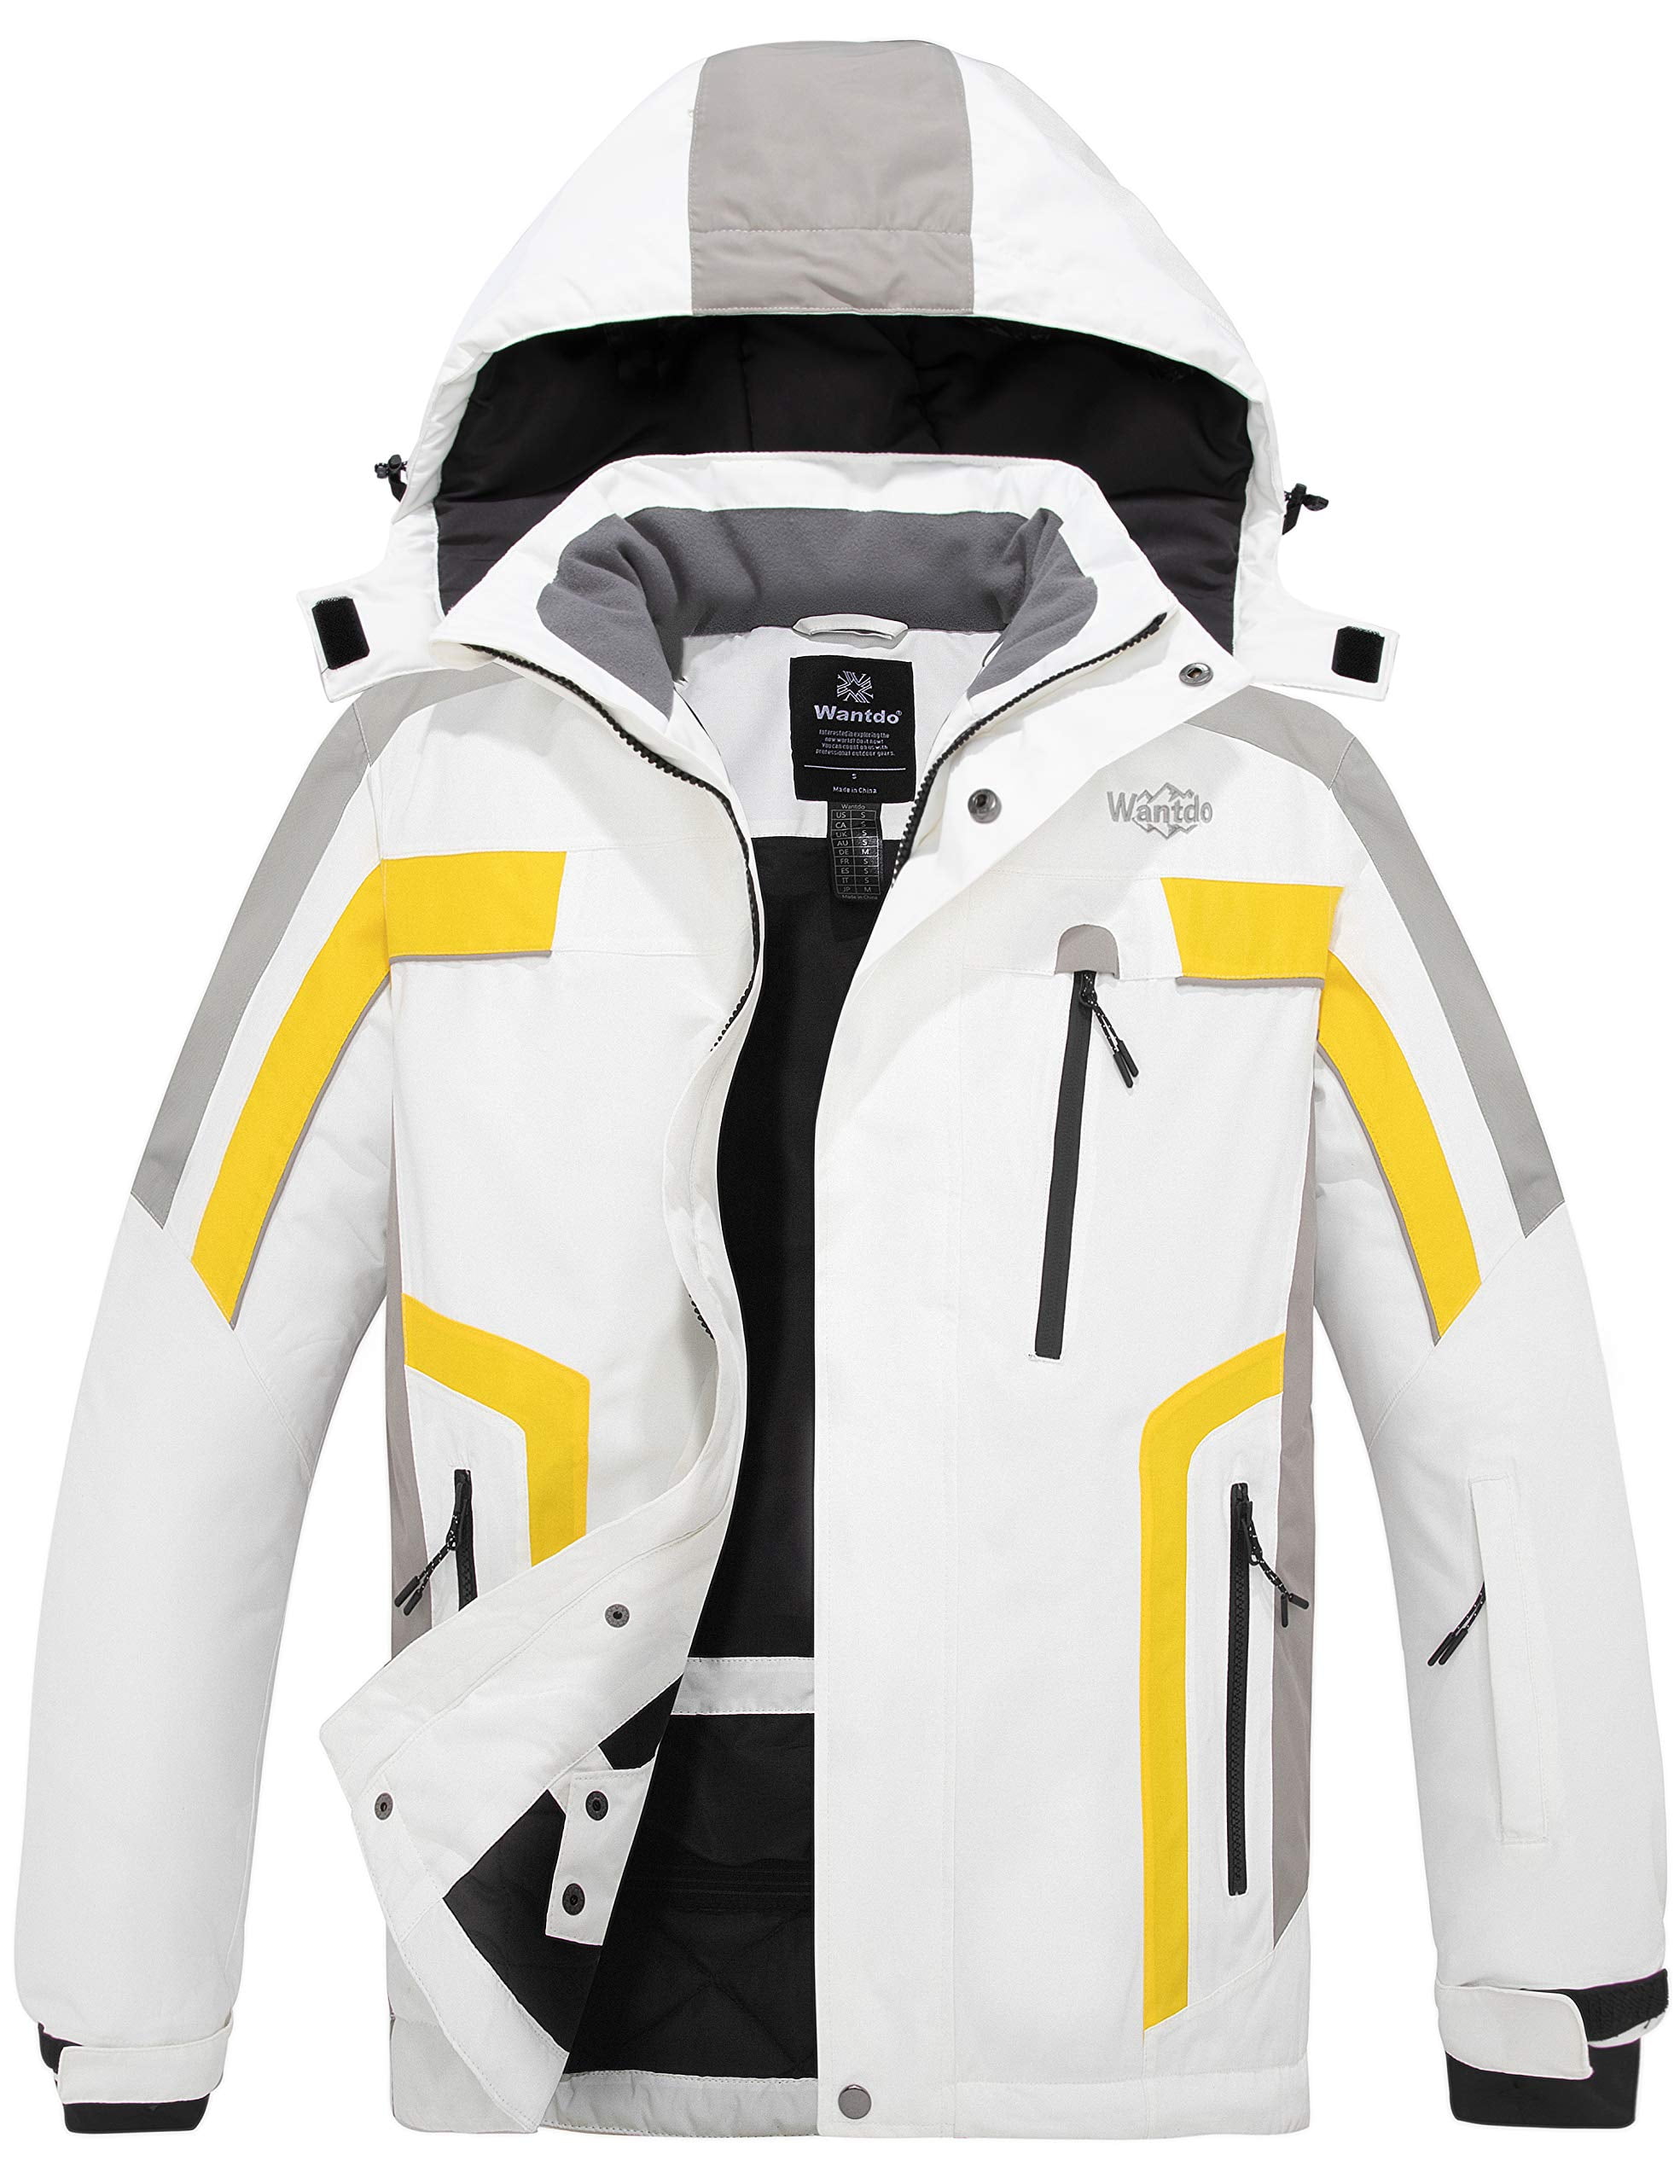 Wantdo Winter Jacket Waterproof Snow Coat with Removable Hood White Grey Size M - Walmart.com